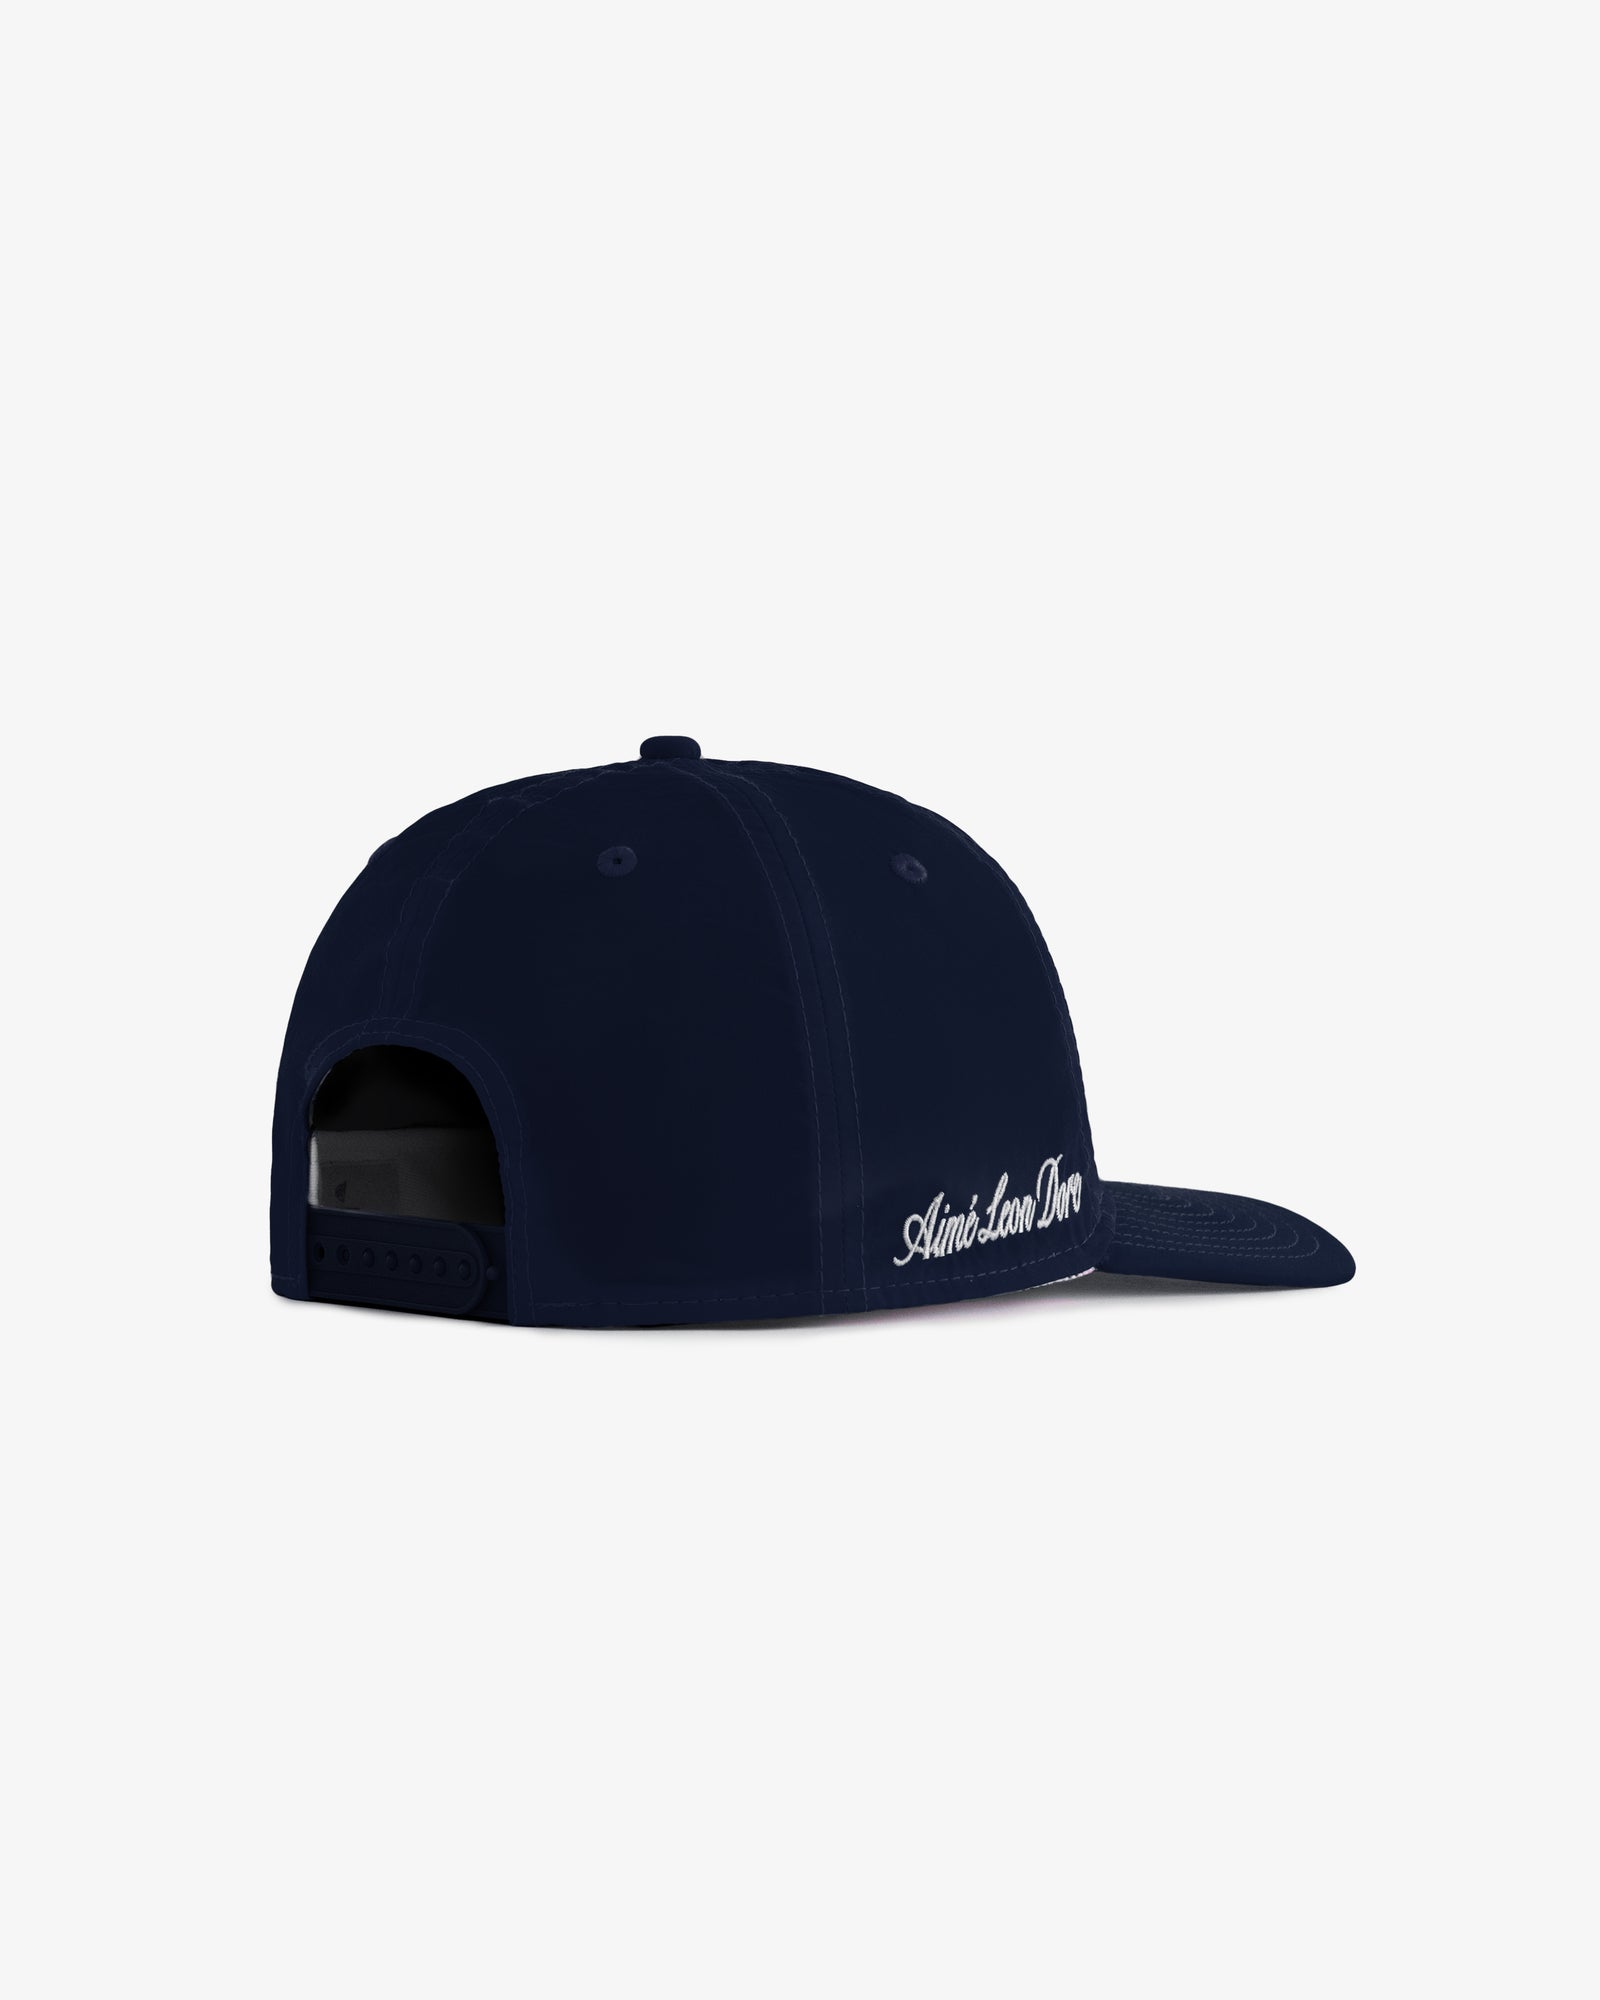 ALD / New Era Yankees Nylon Hat